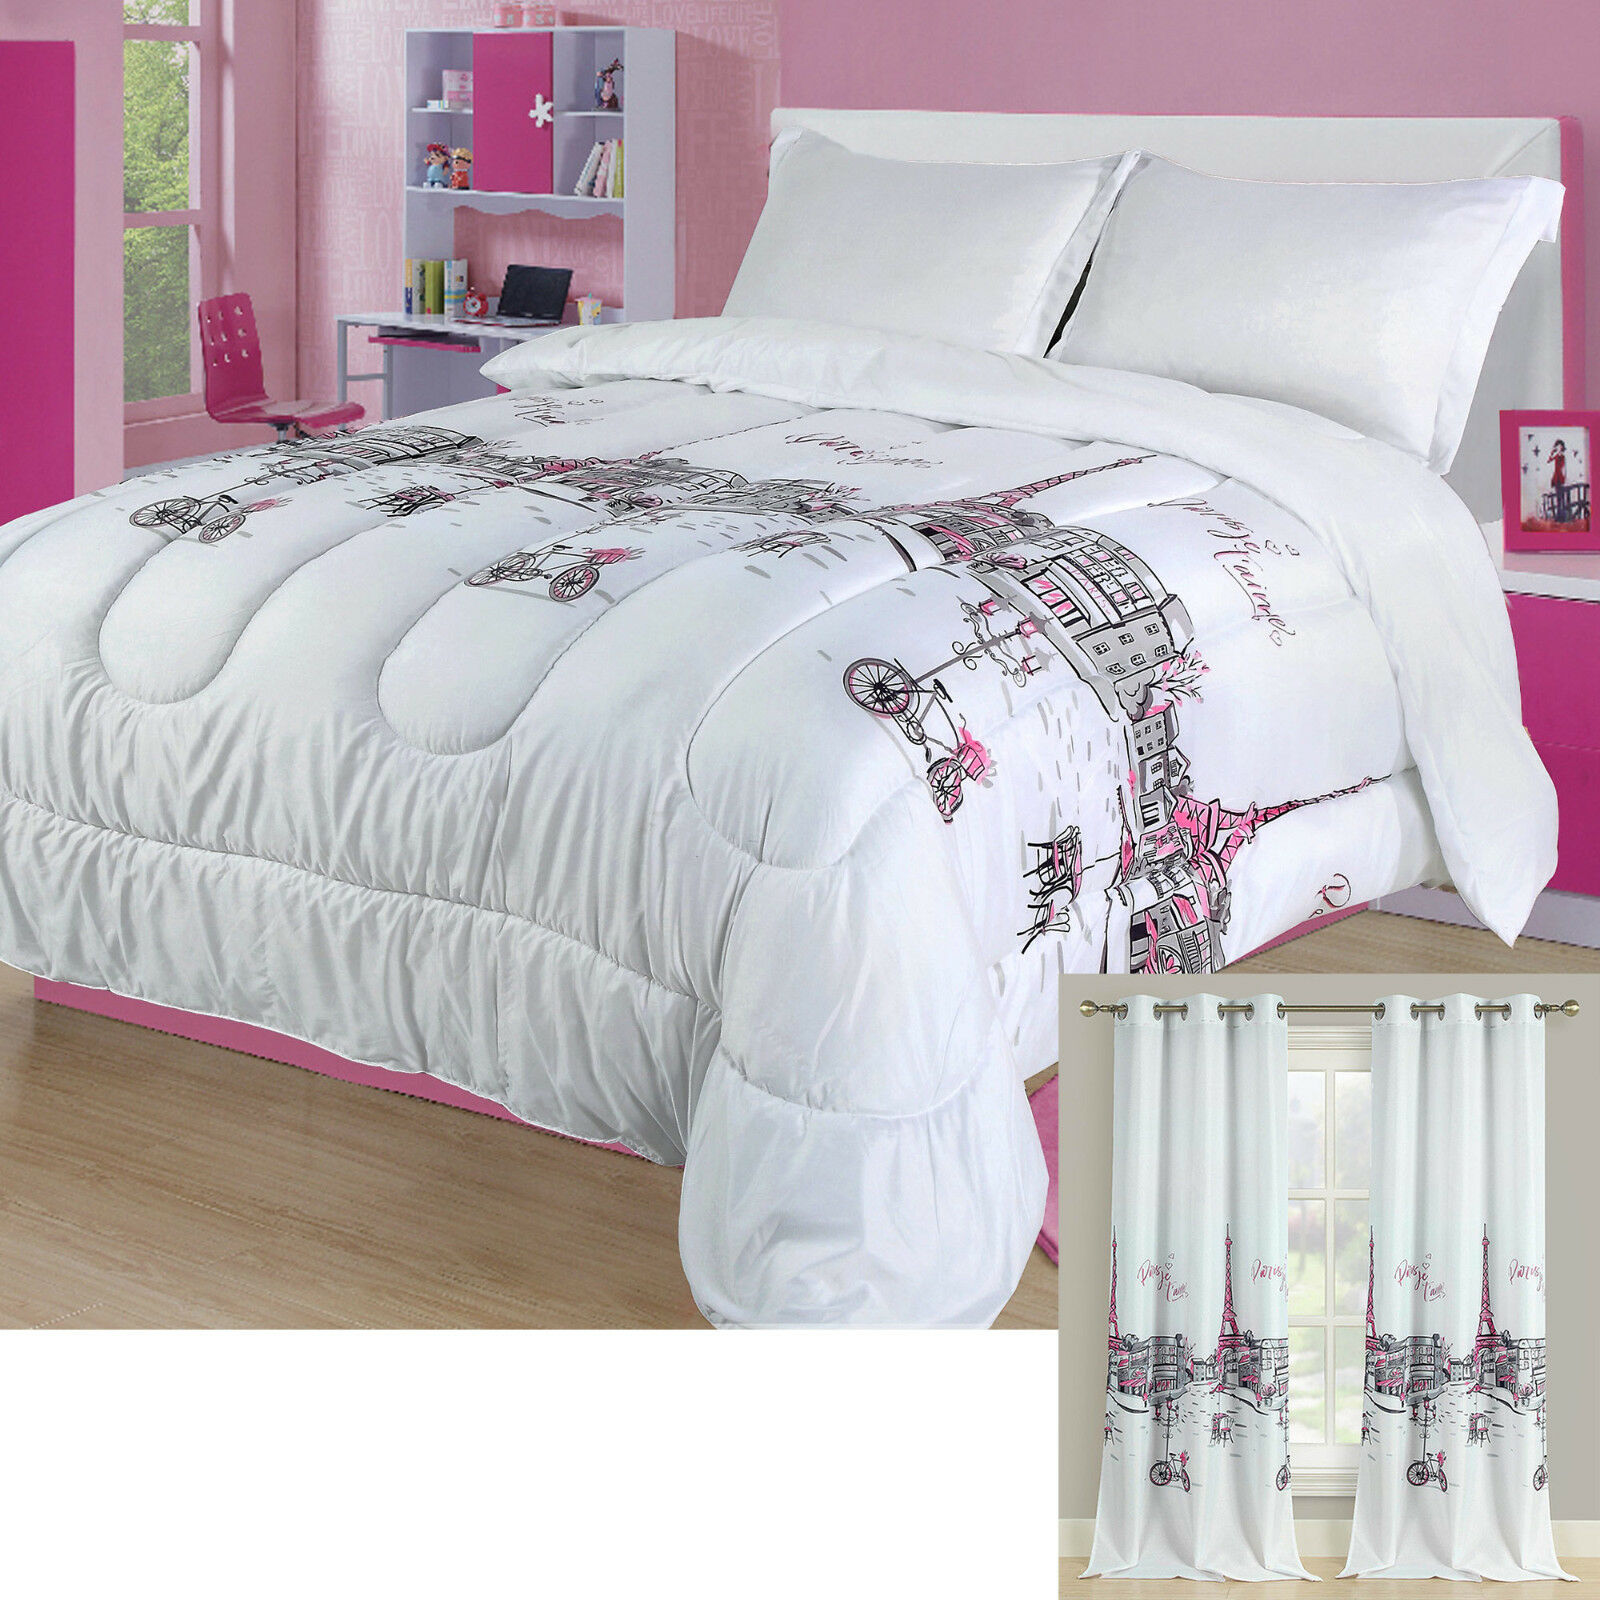 Twin, Full/queen, Or King Paris Comforter Bedding Set Pink Grey Eiffel Tower